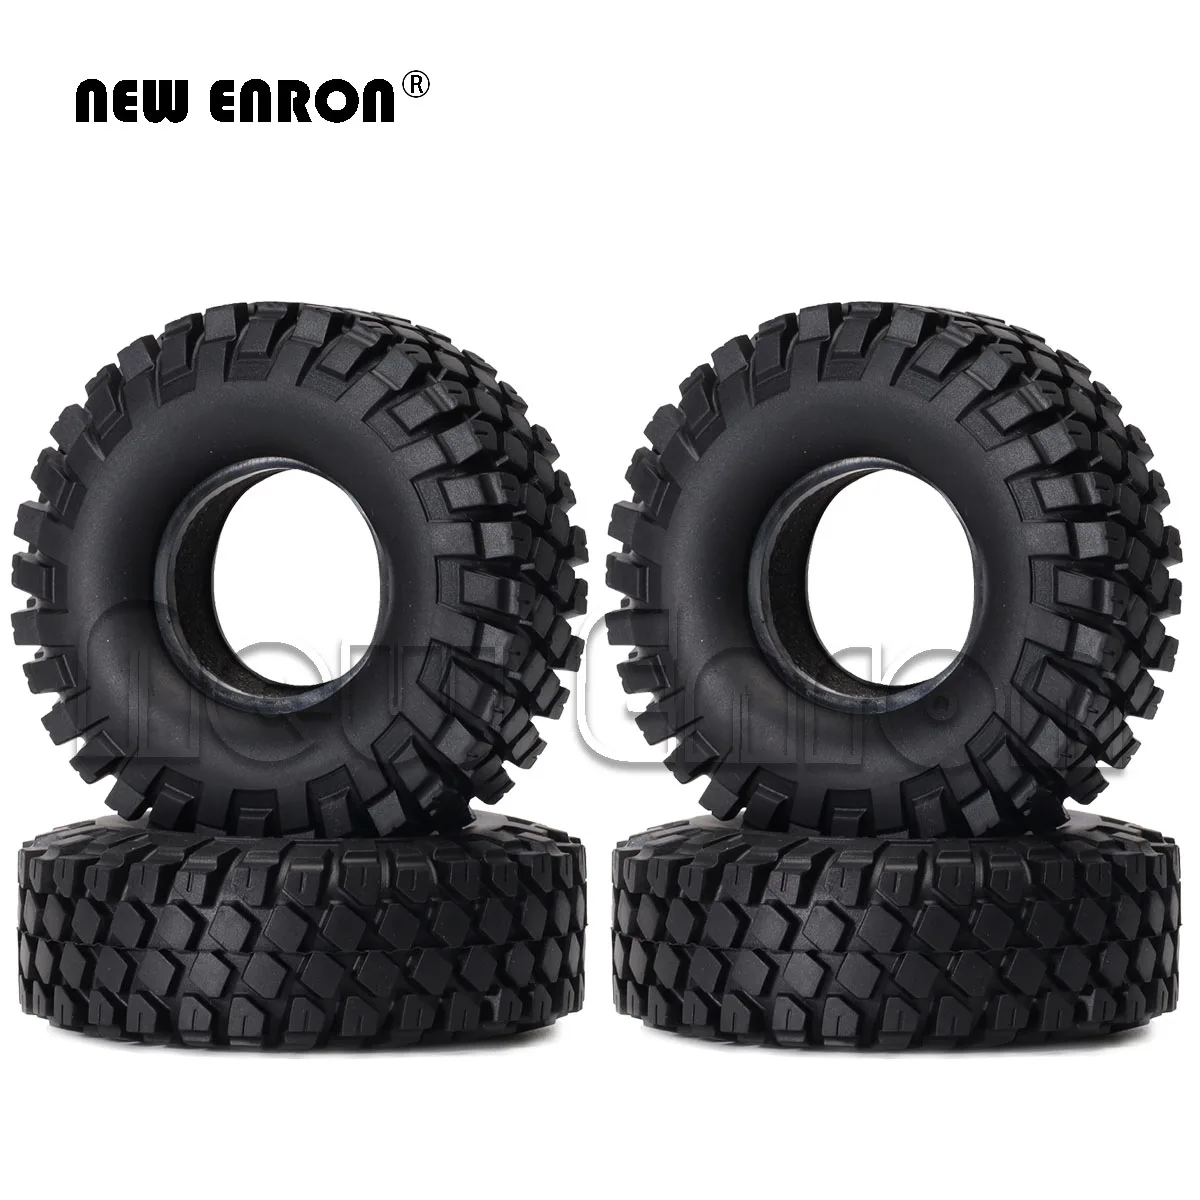 

NEW ENRON 1.9" 112MM Swamper Rocks Tyre Tires 4P For RC 1/10 Climbing Rock Crawler TRX-4 TRX4 Tamiya CC01 MST jimny D90 D110